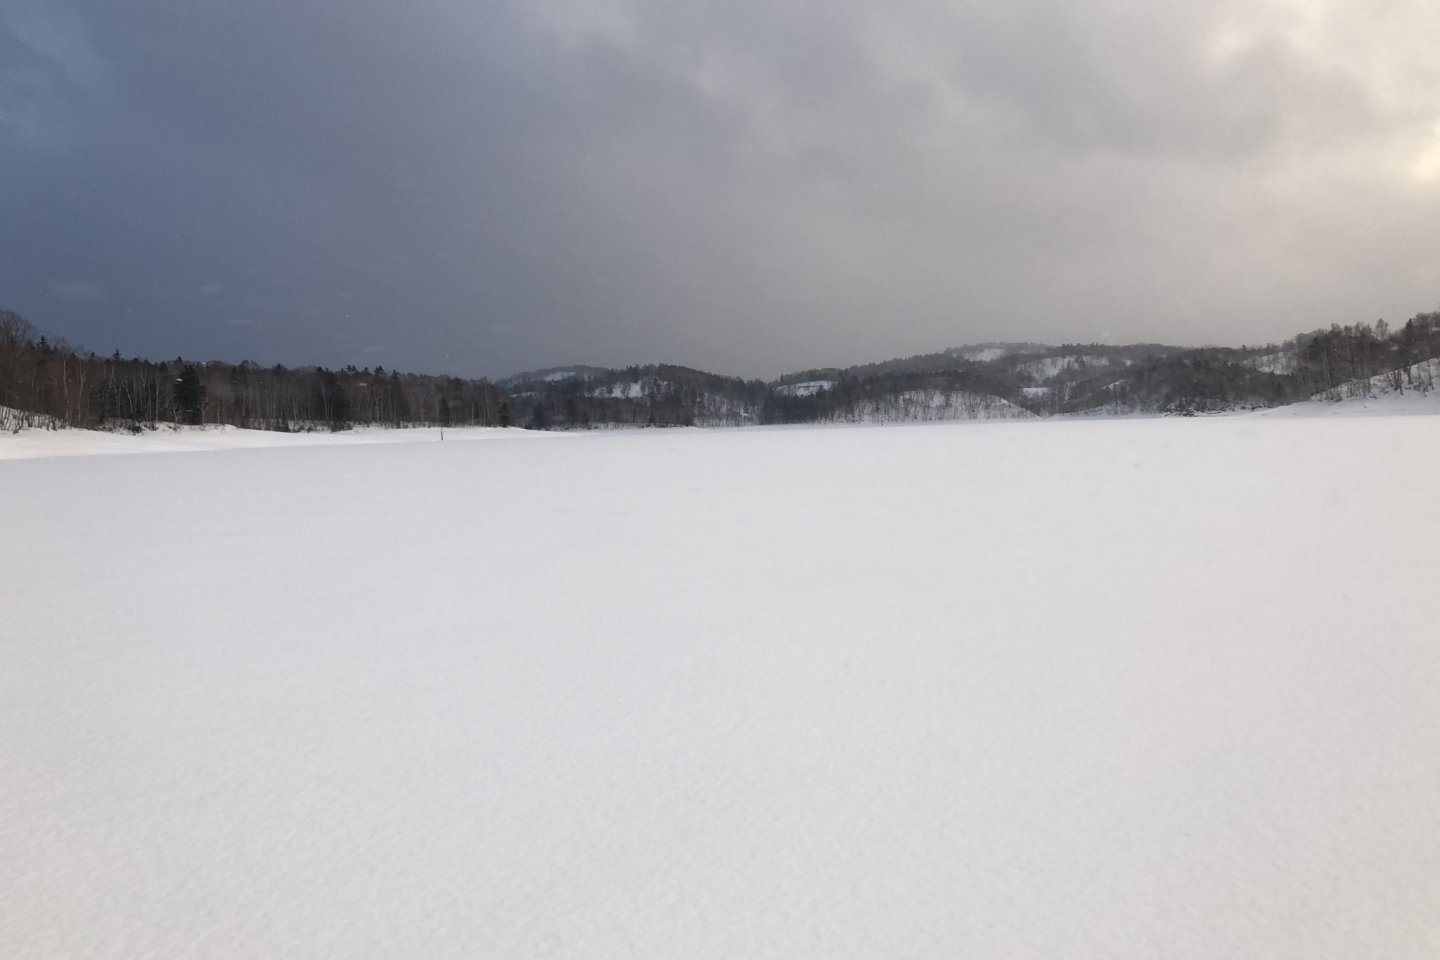 The frozen Lake Shumarinai